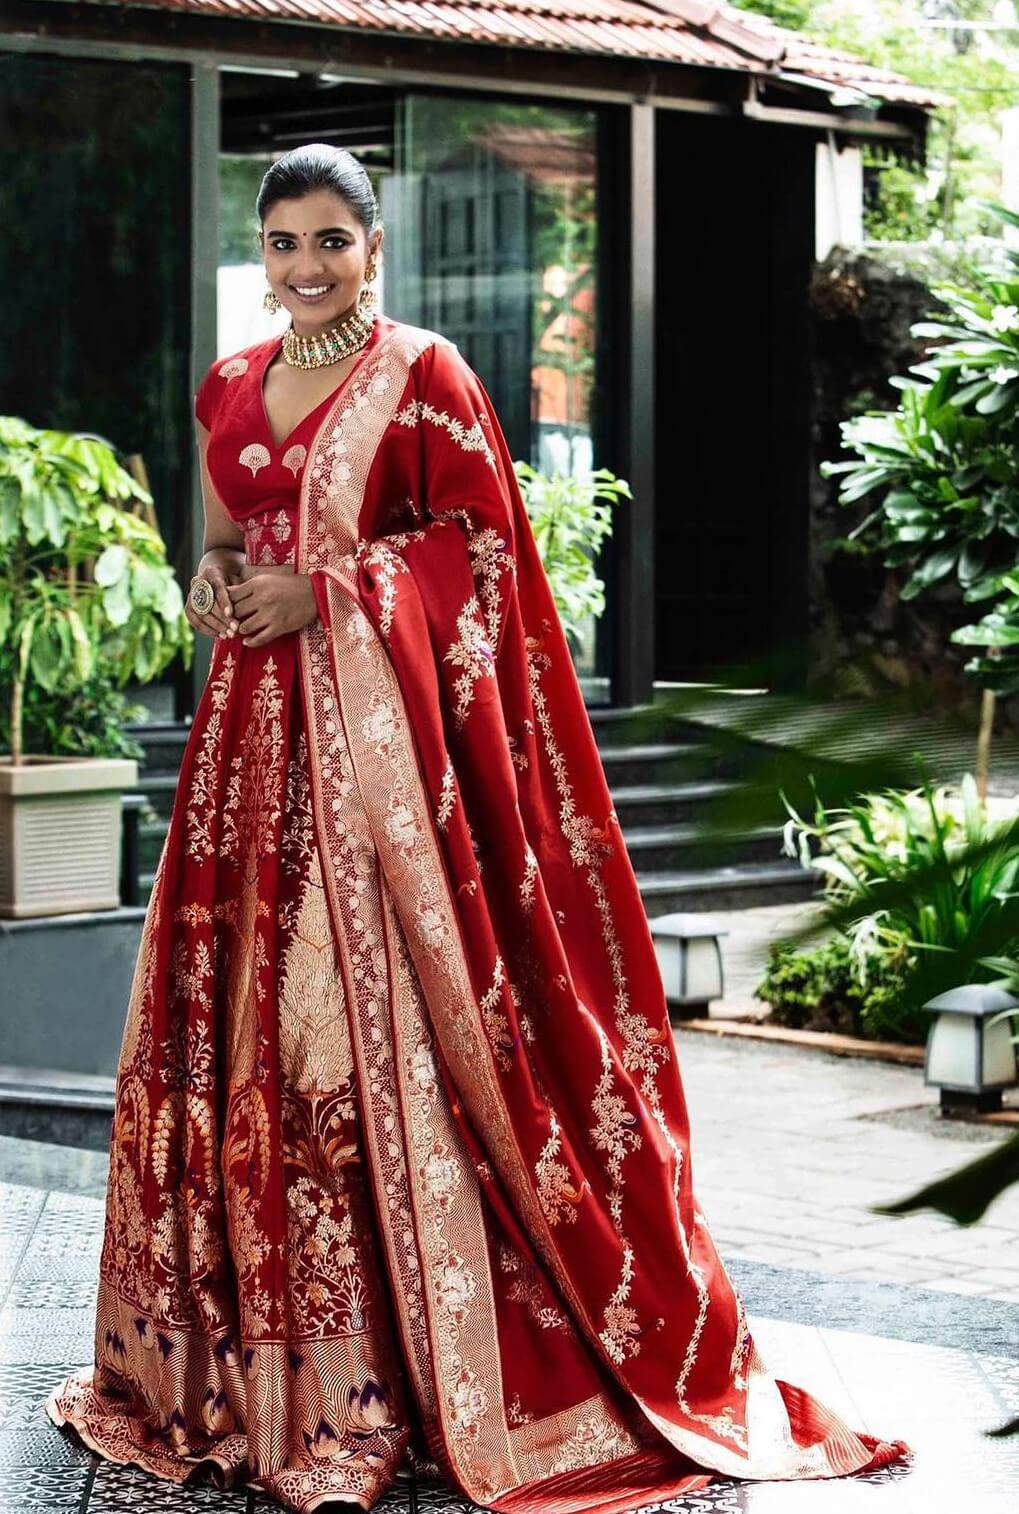 Aishwarya Rajesh In Red Banarasi Silk Lehenga Can Be Your Bridal Chic & Stunning Outfits Looks